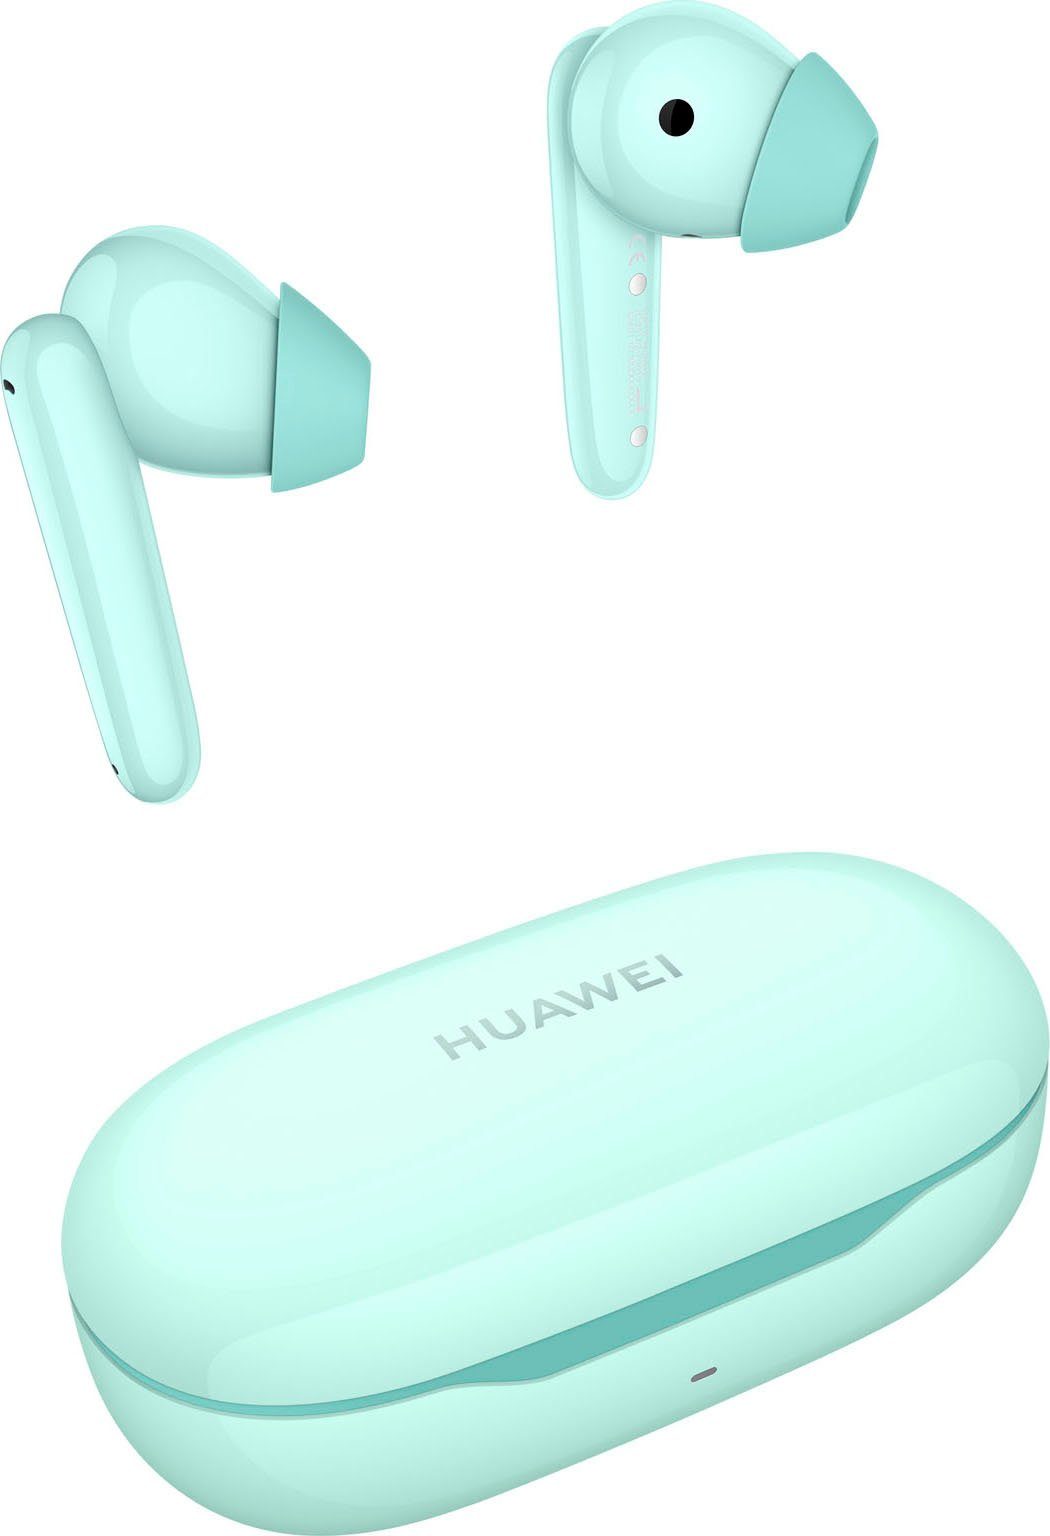 Huawei FreeBuds SE wireless In-Ear-Kopfhörer (Premium-Design, Kristallklarer Sound, Lange Akkulaufzeit) Blau | In-Ear-Kopfhörer